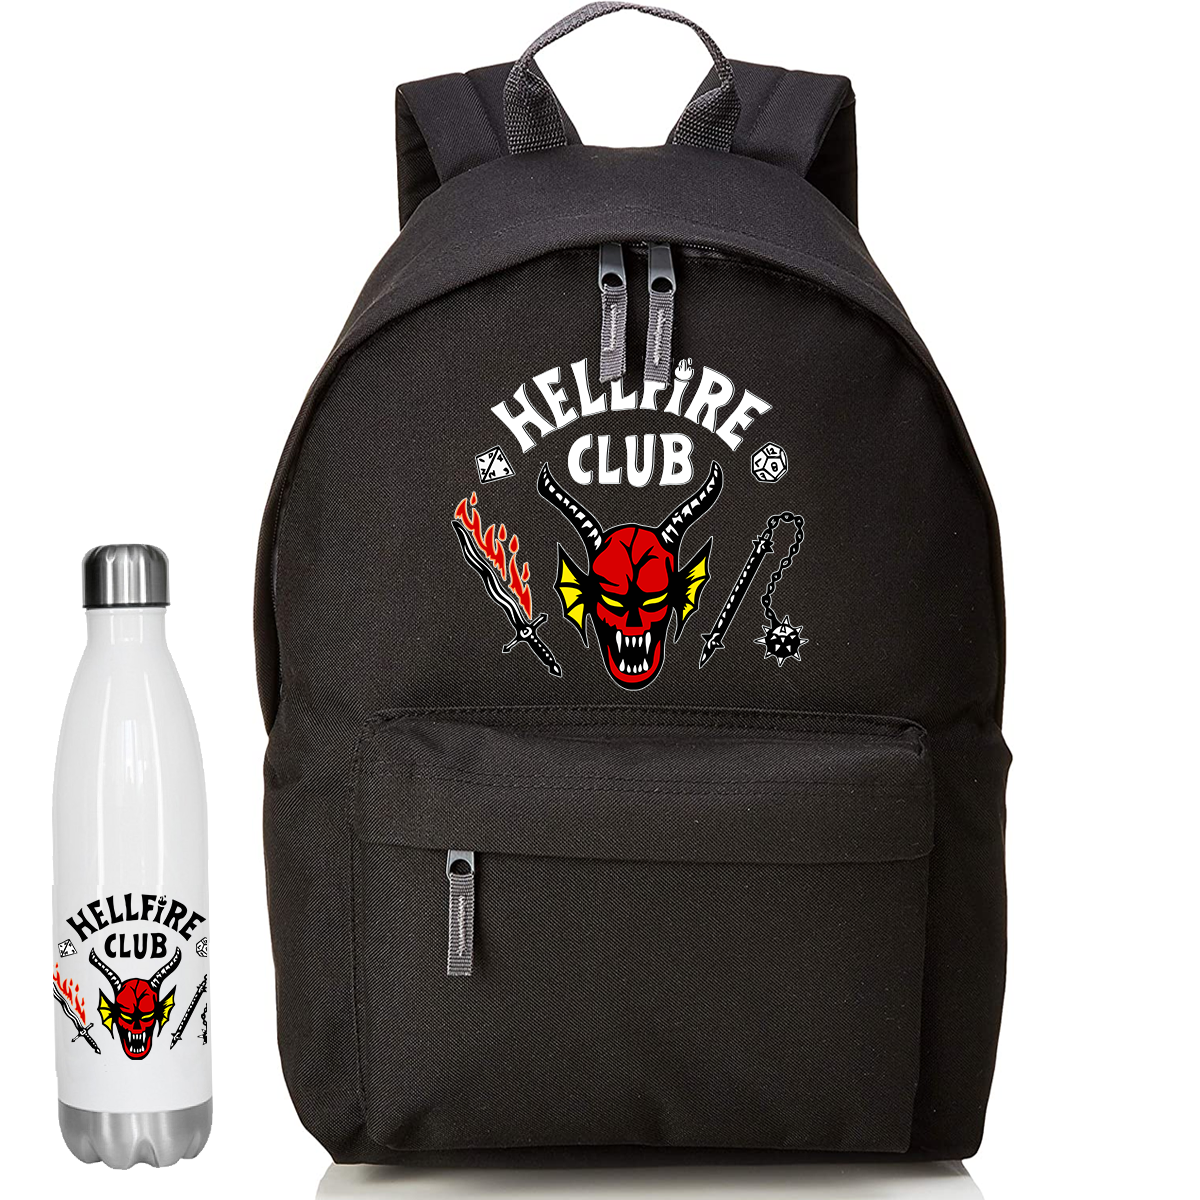 Hellfire Club Black Backpack - Bag